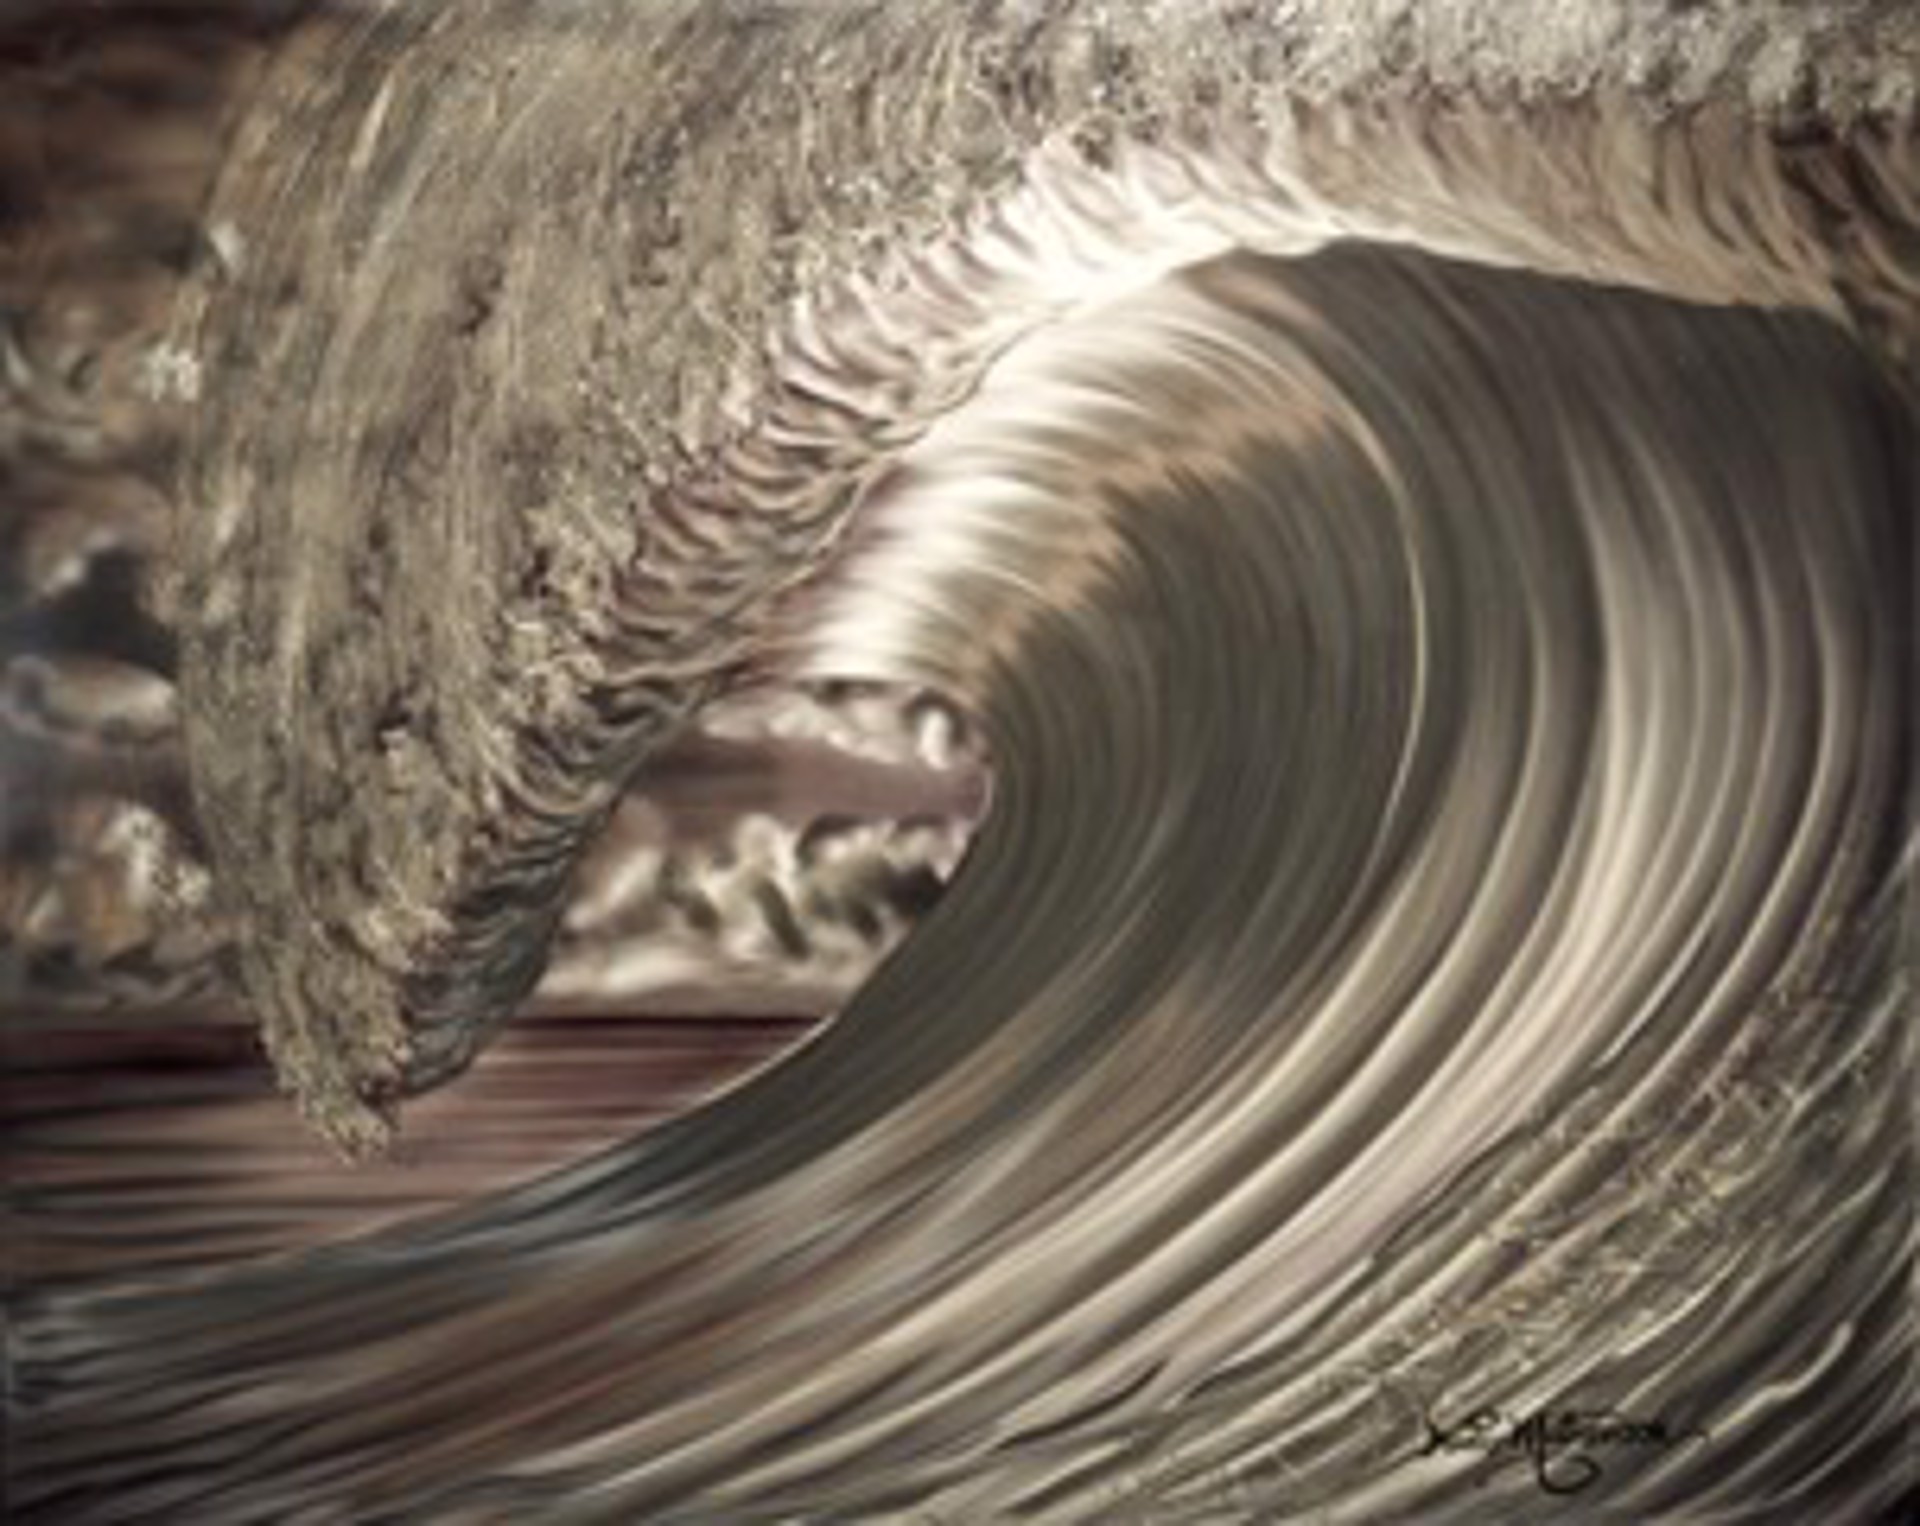 Ocean Swell by Dennis Mathewson